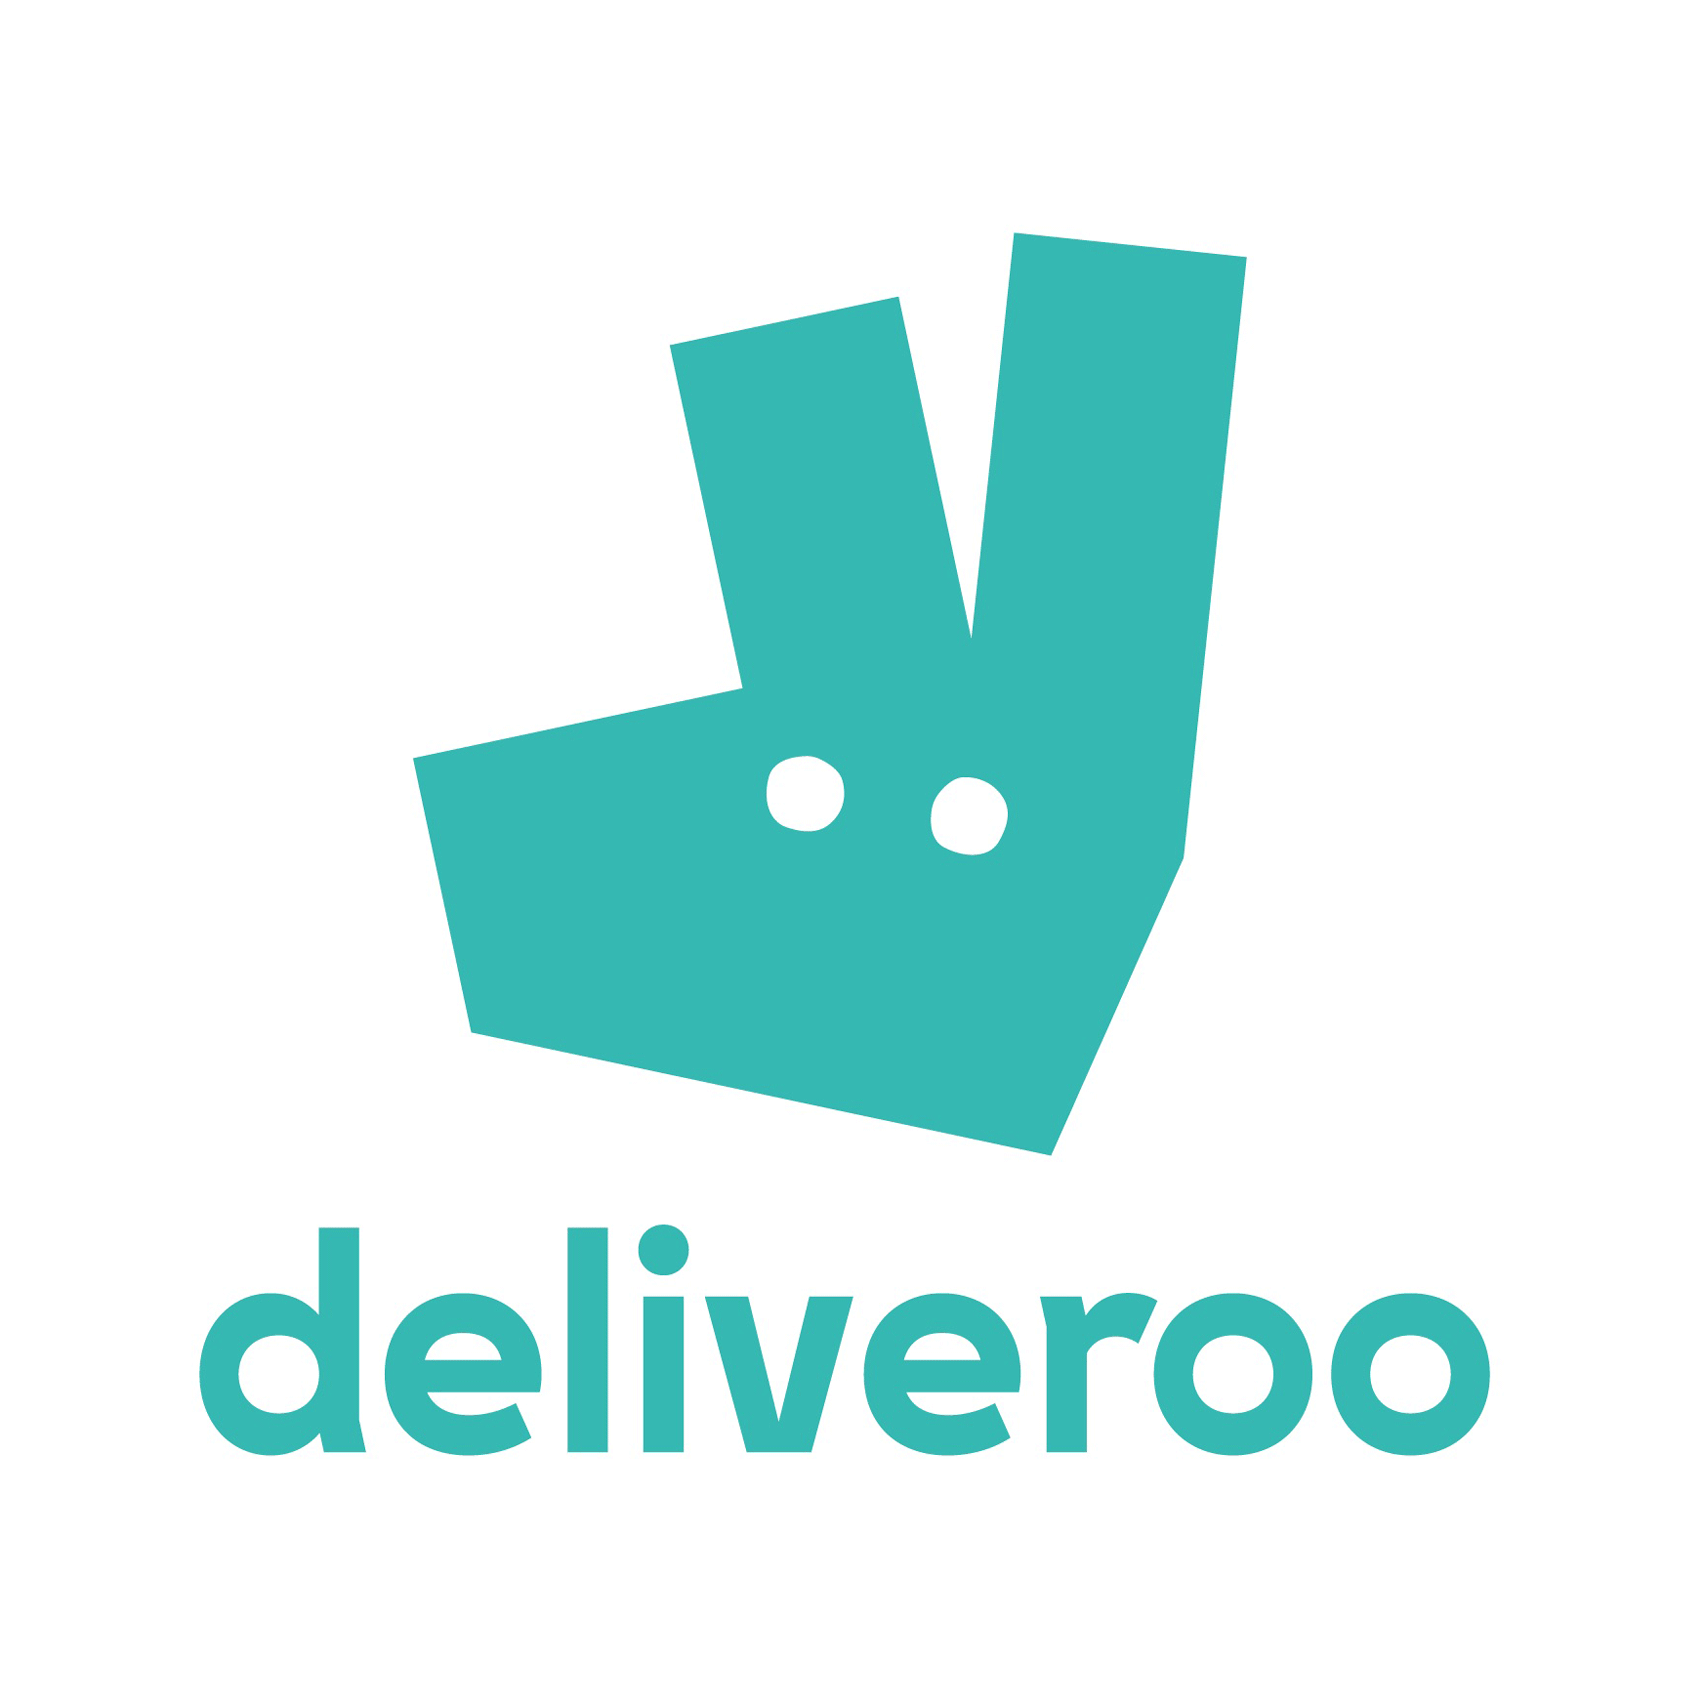 DesignStudio completes minimal rebrand for Deliveroo